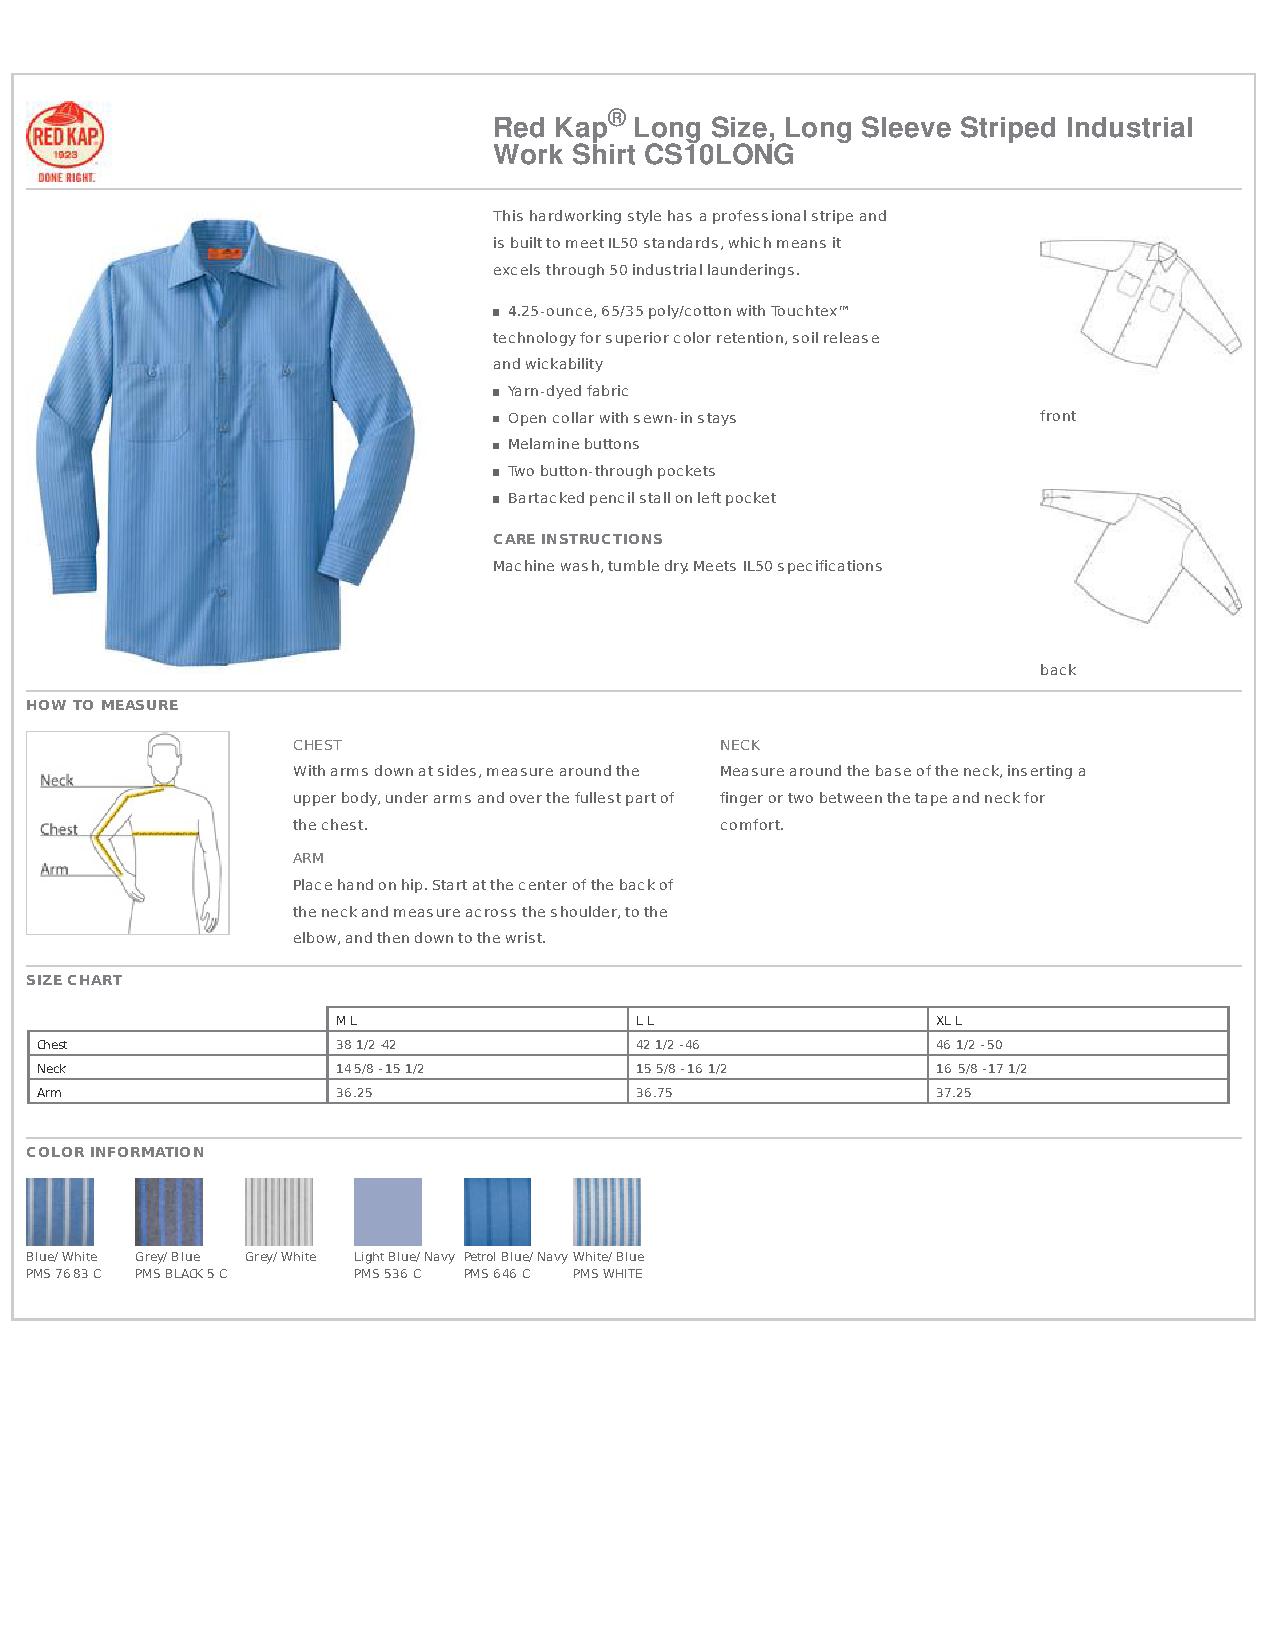 Red Kap Work Shirt Size Chart